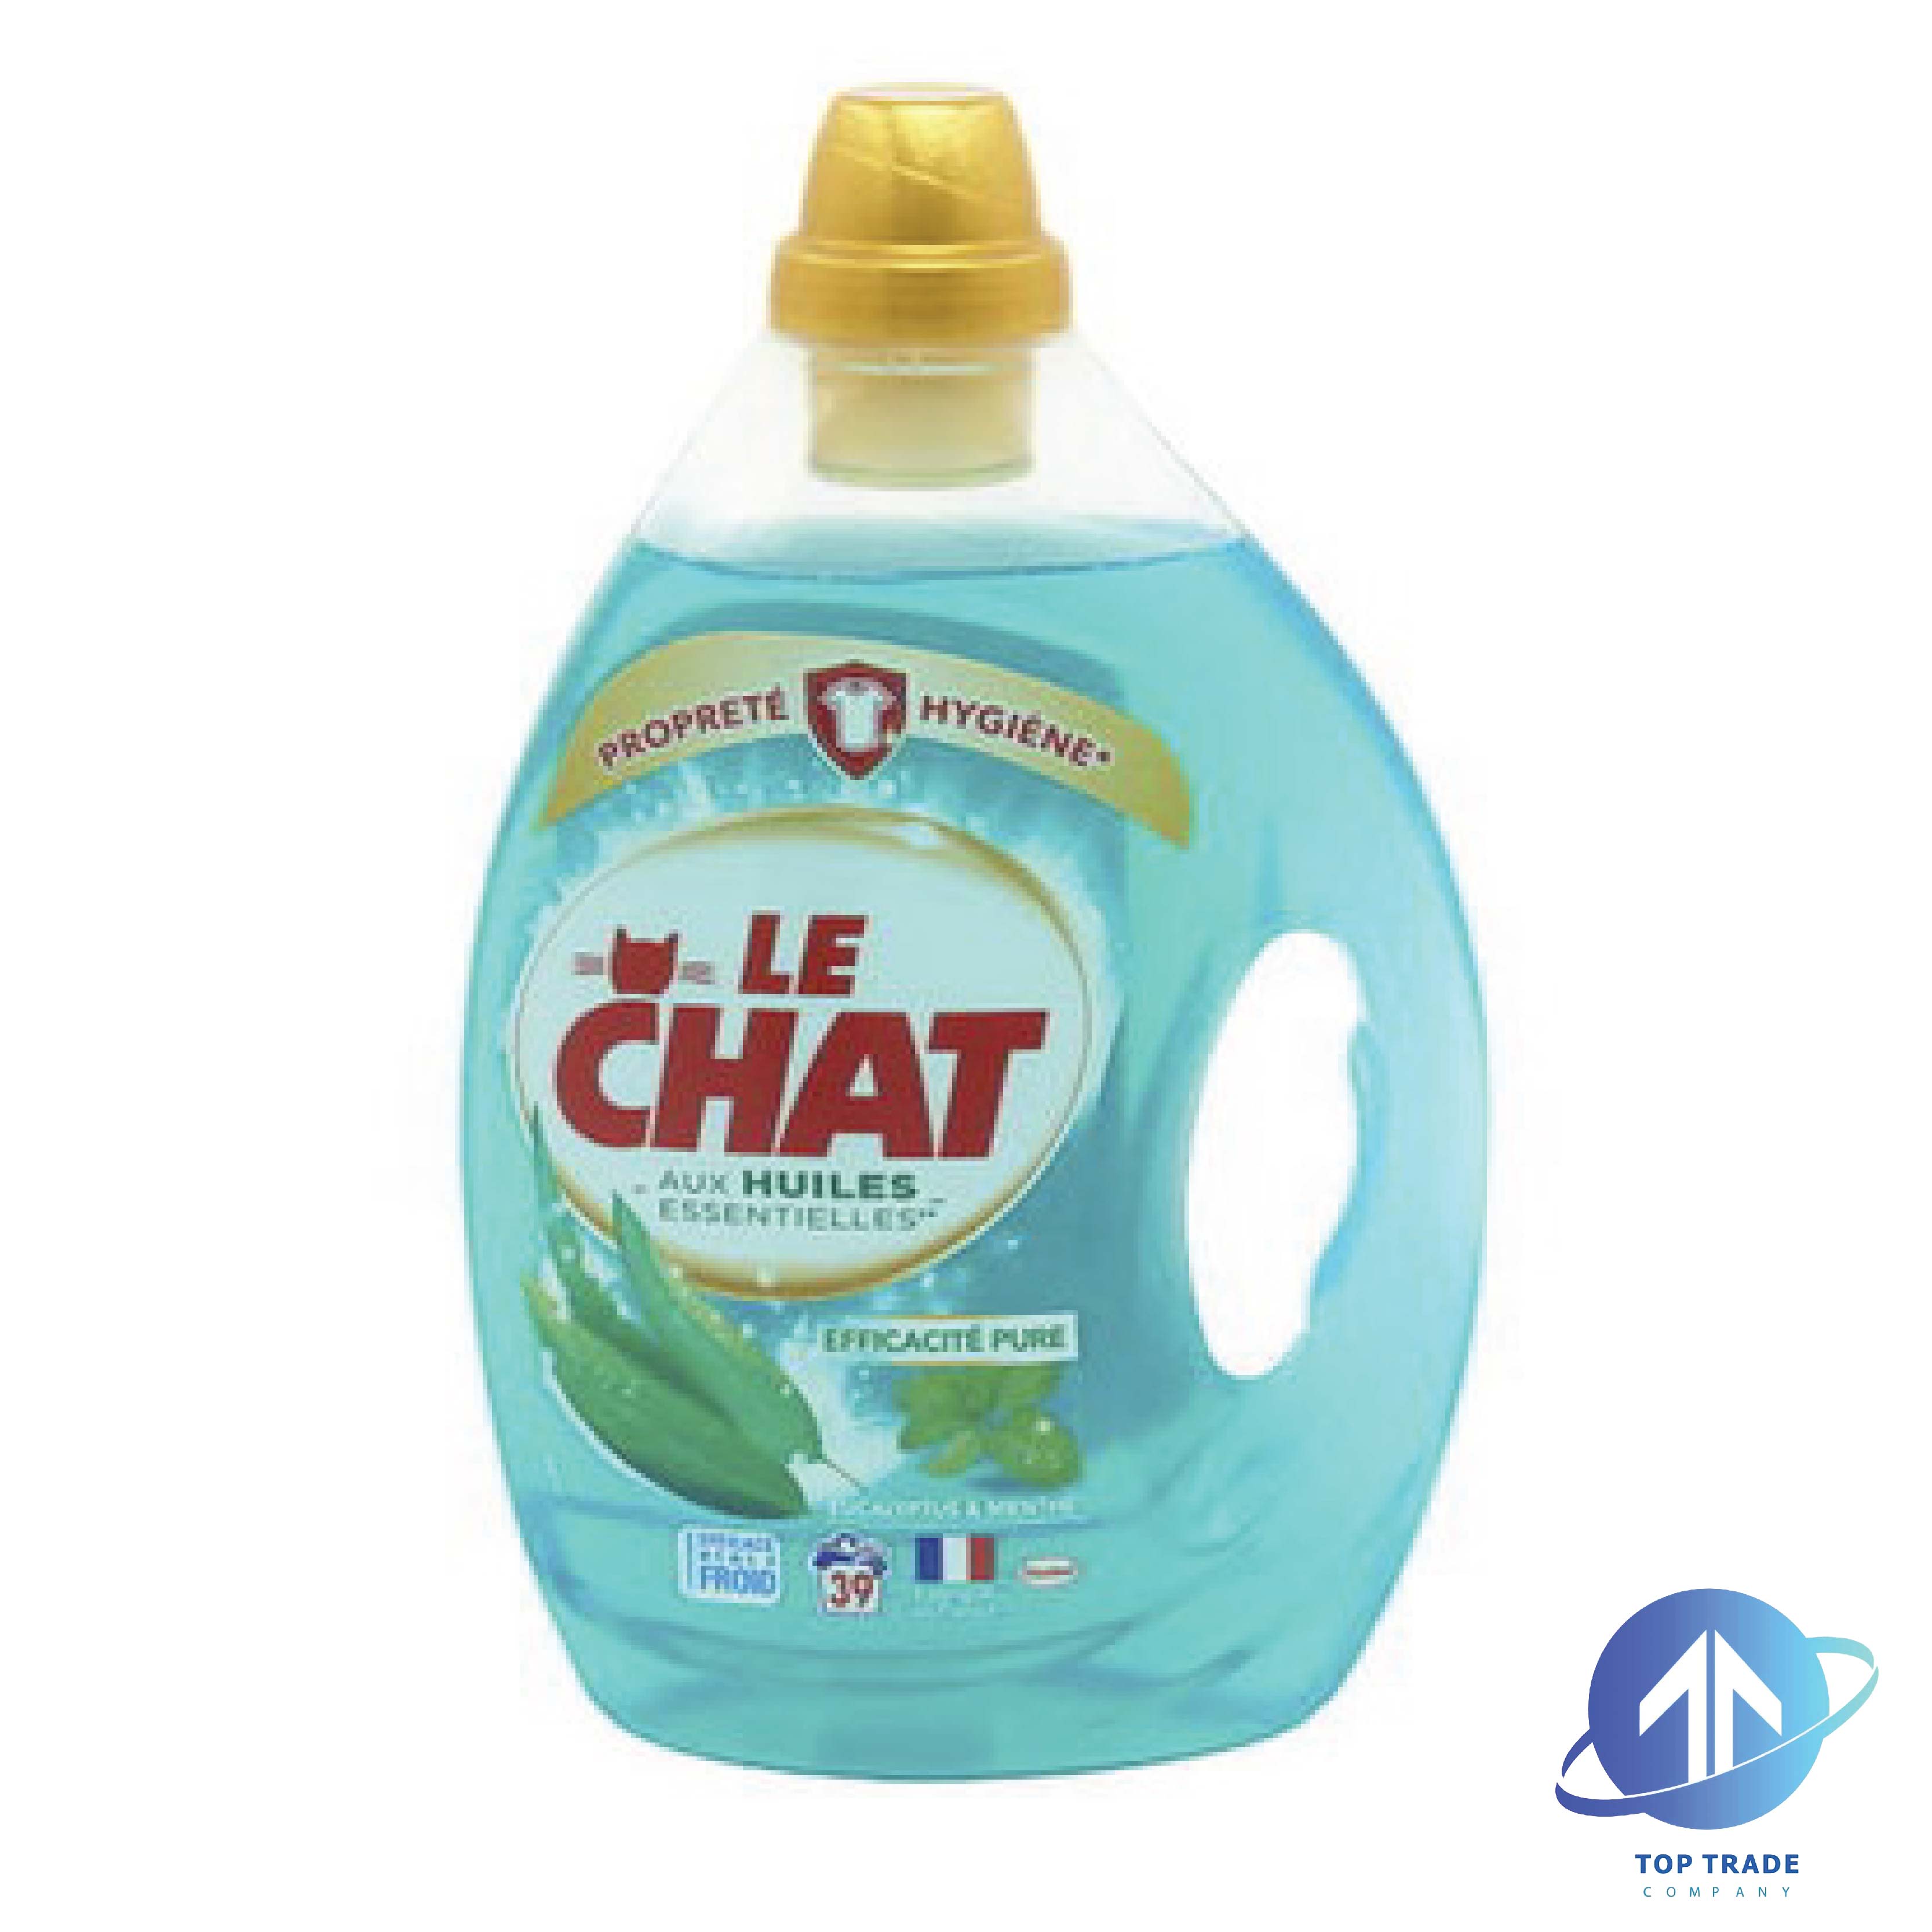 Le Chat washing liquid 1,95L/39sc essential oils Eucalyptus and Mint